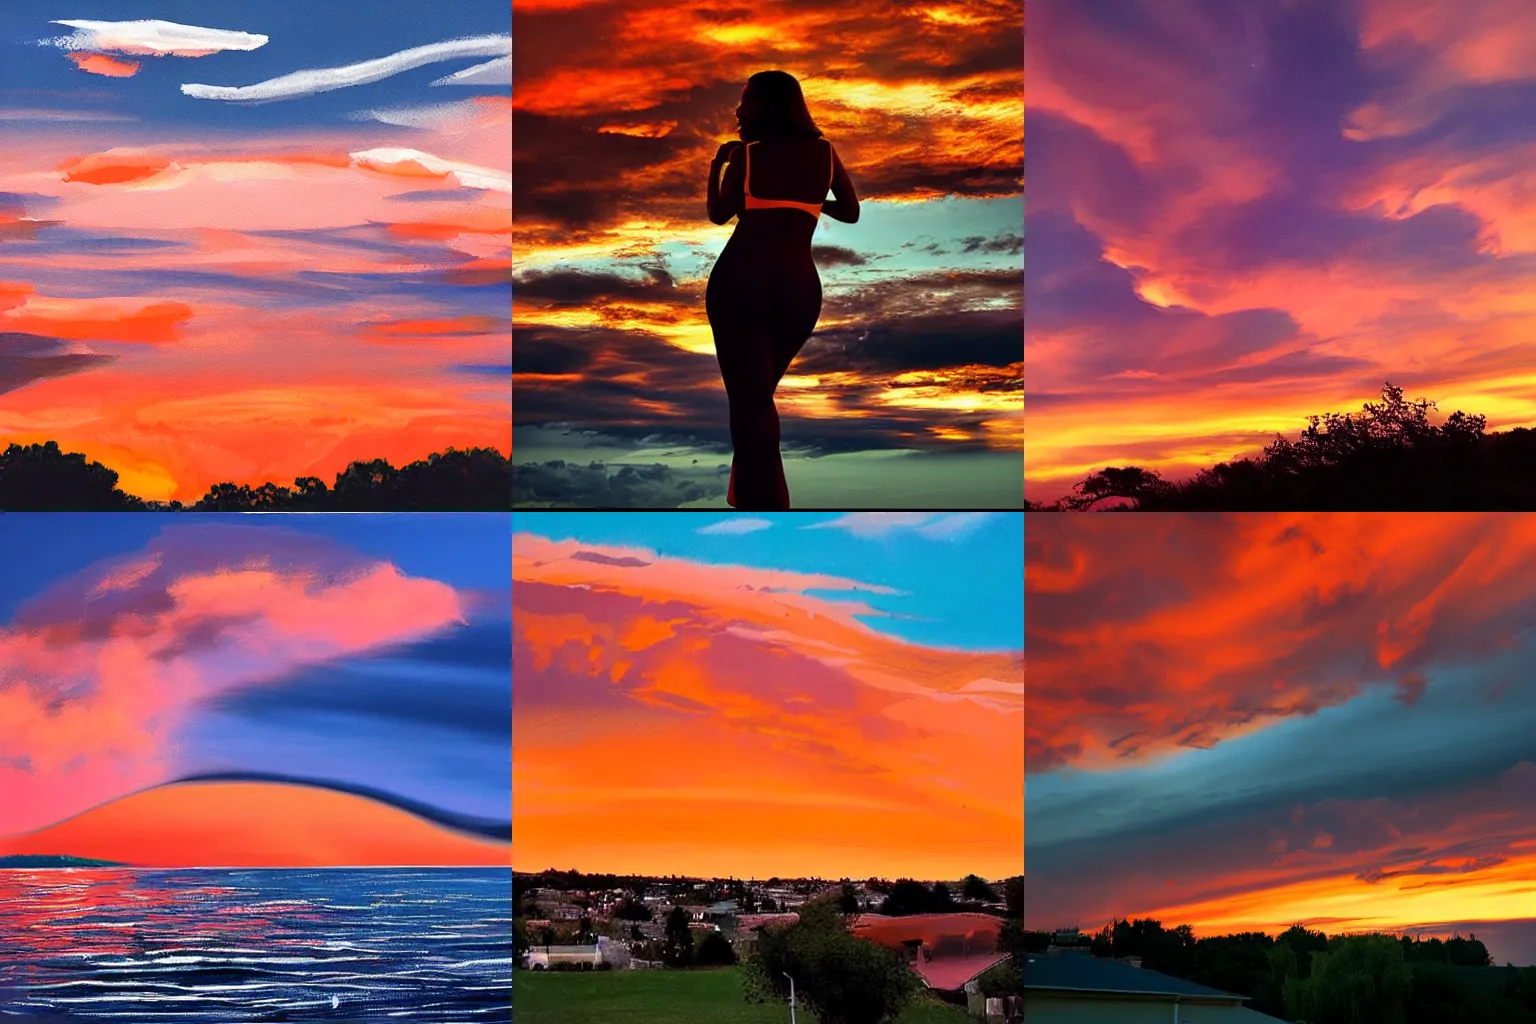 Prompt: painting sky orange clouds at sundown in the shape of beautiful seductive curvy women